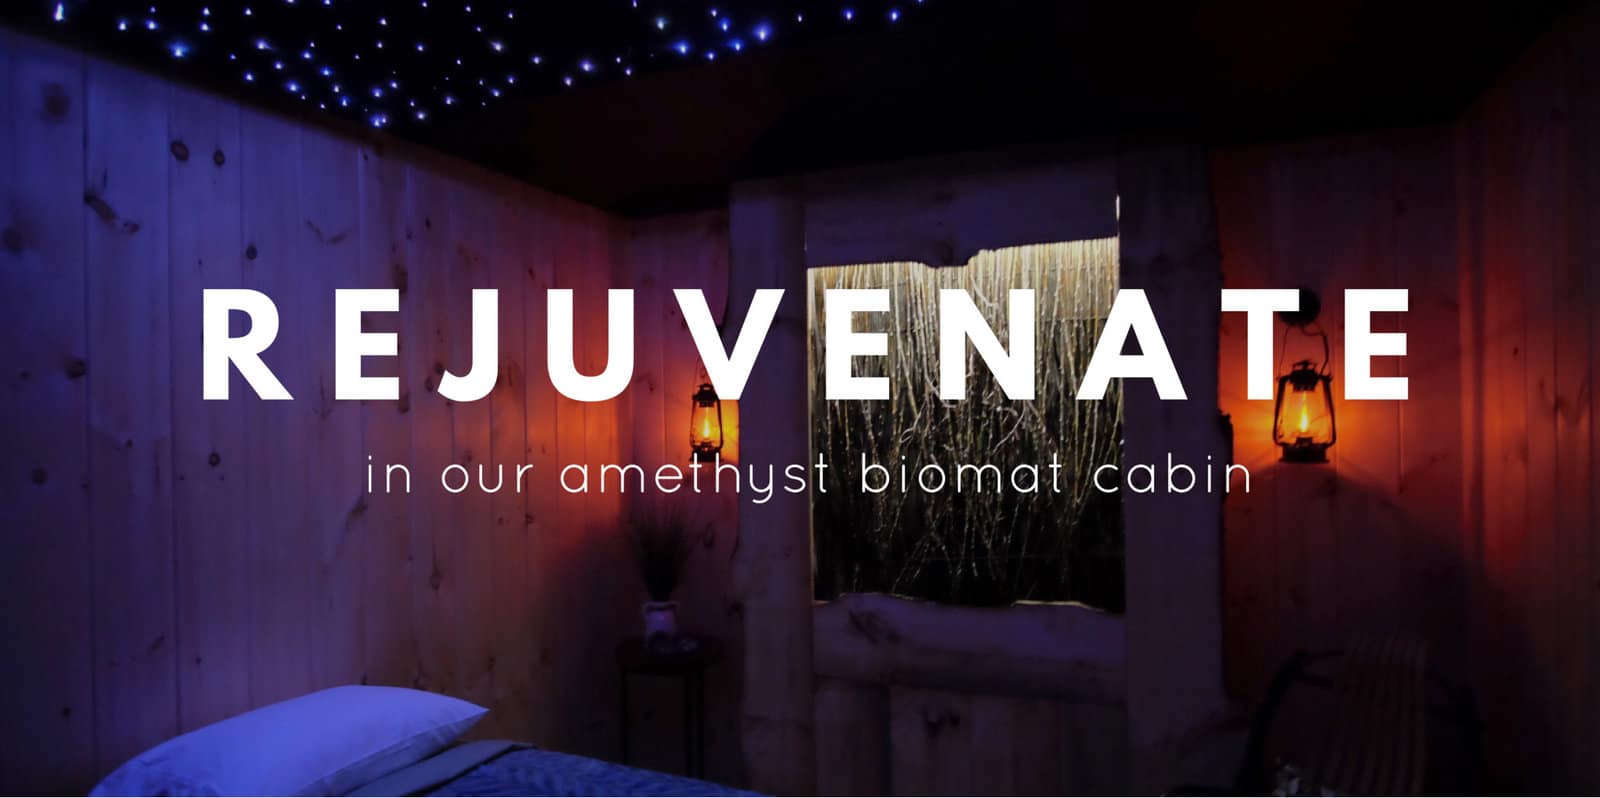 a rejuvenating amethyst biomat cabin